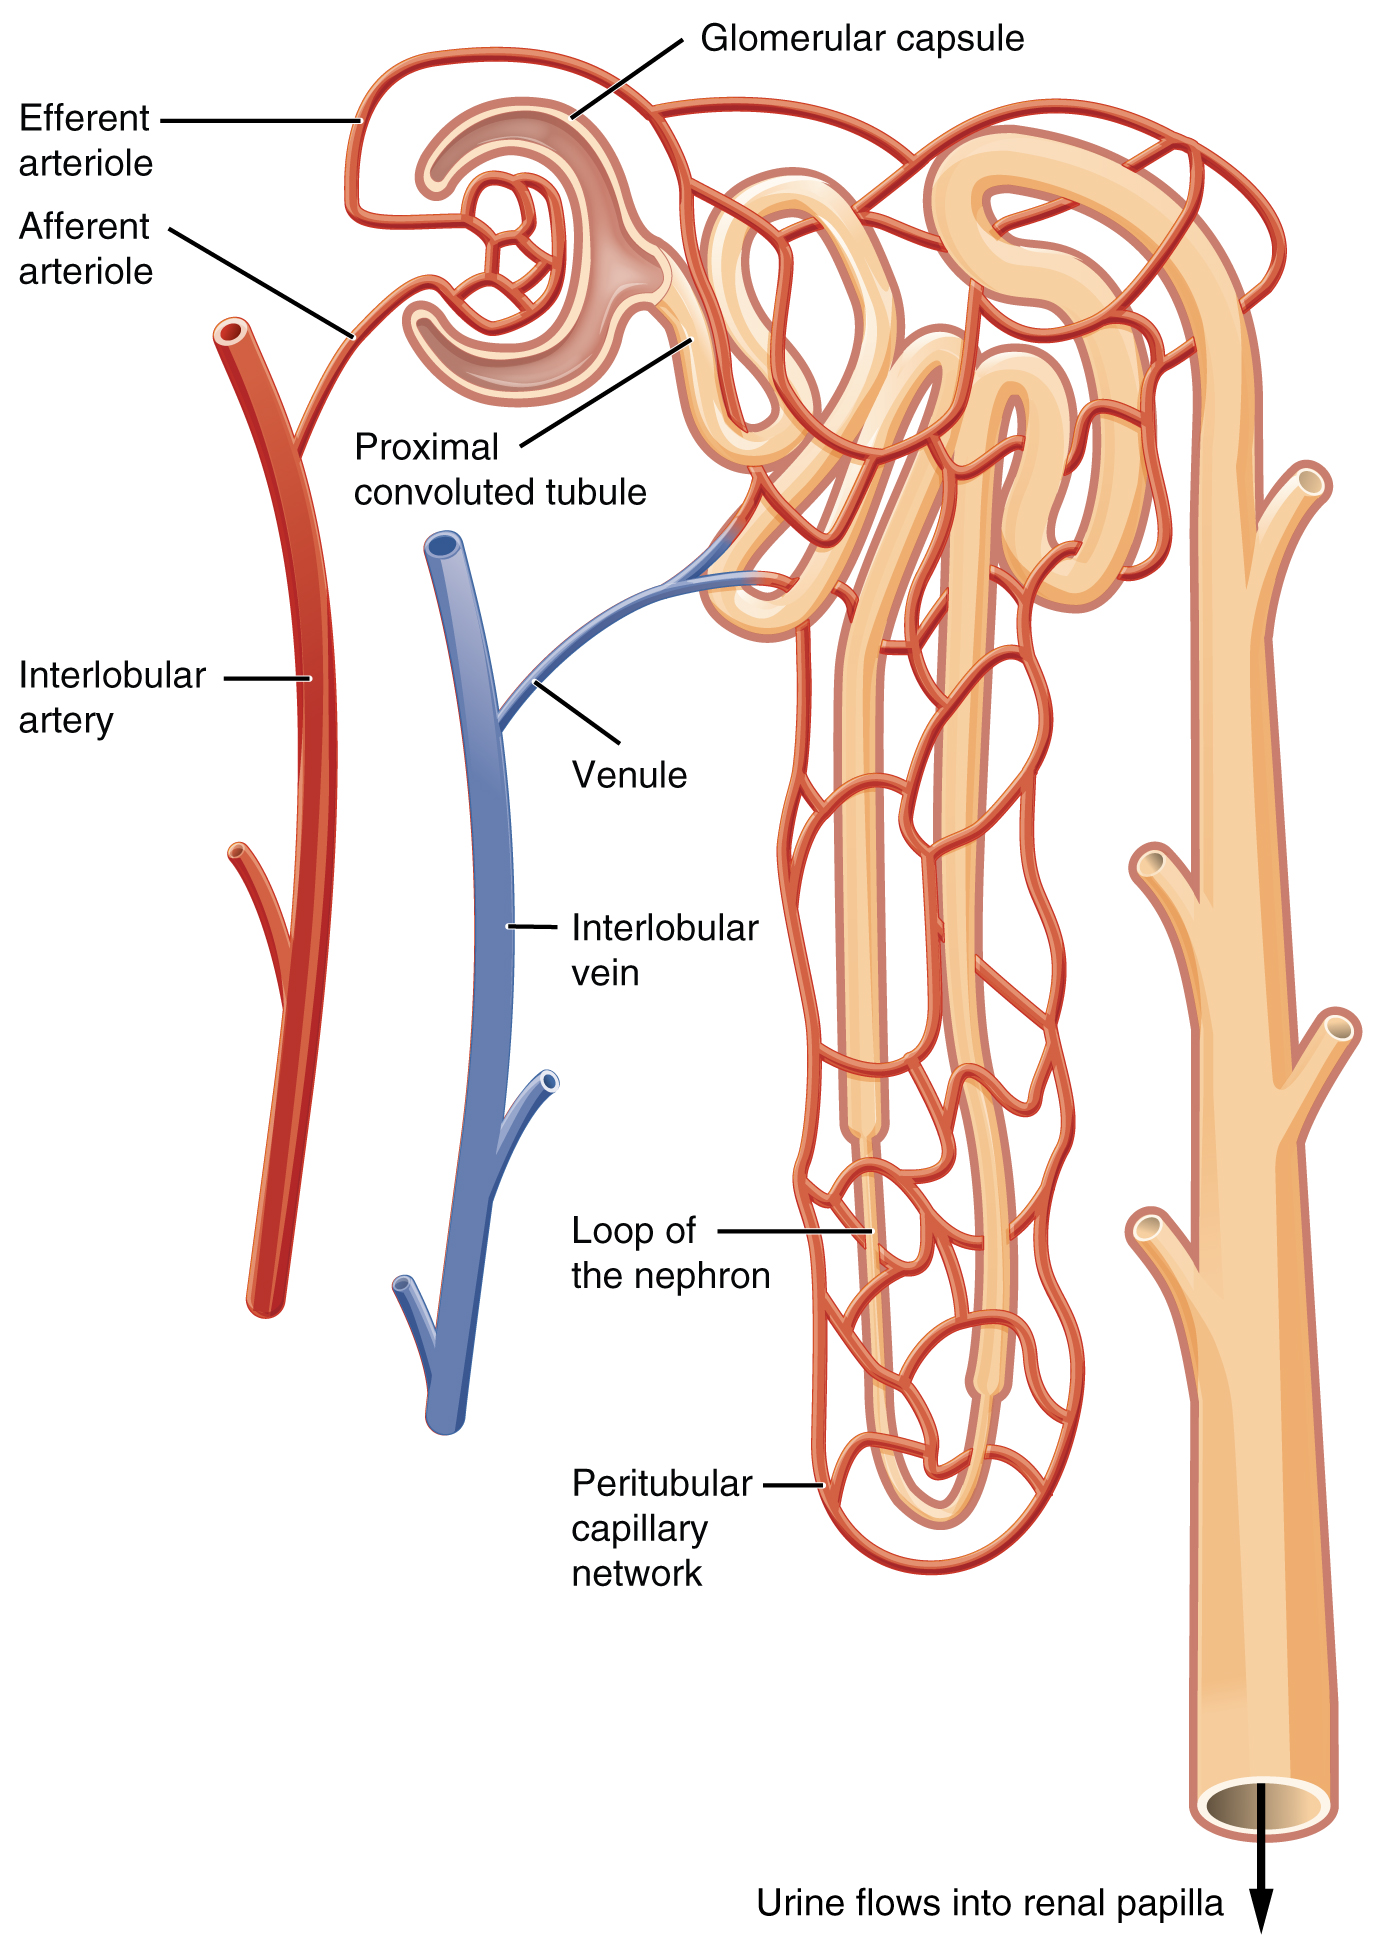 Blood flow in nephron